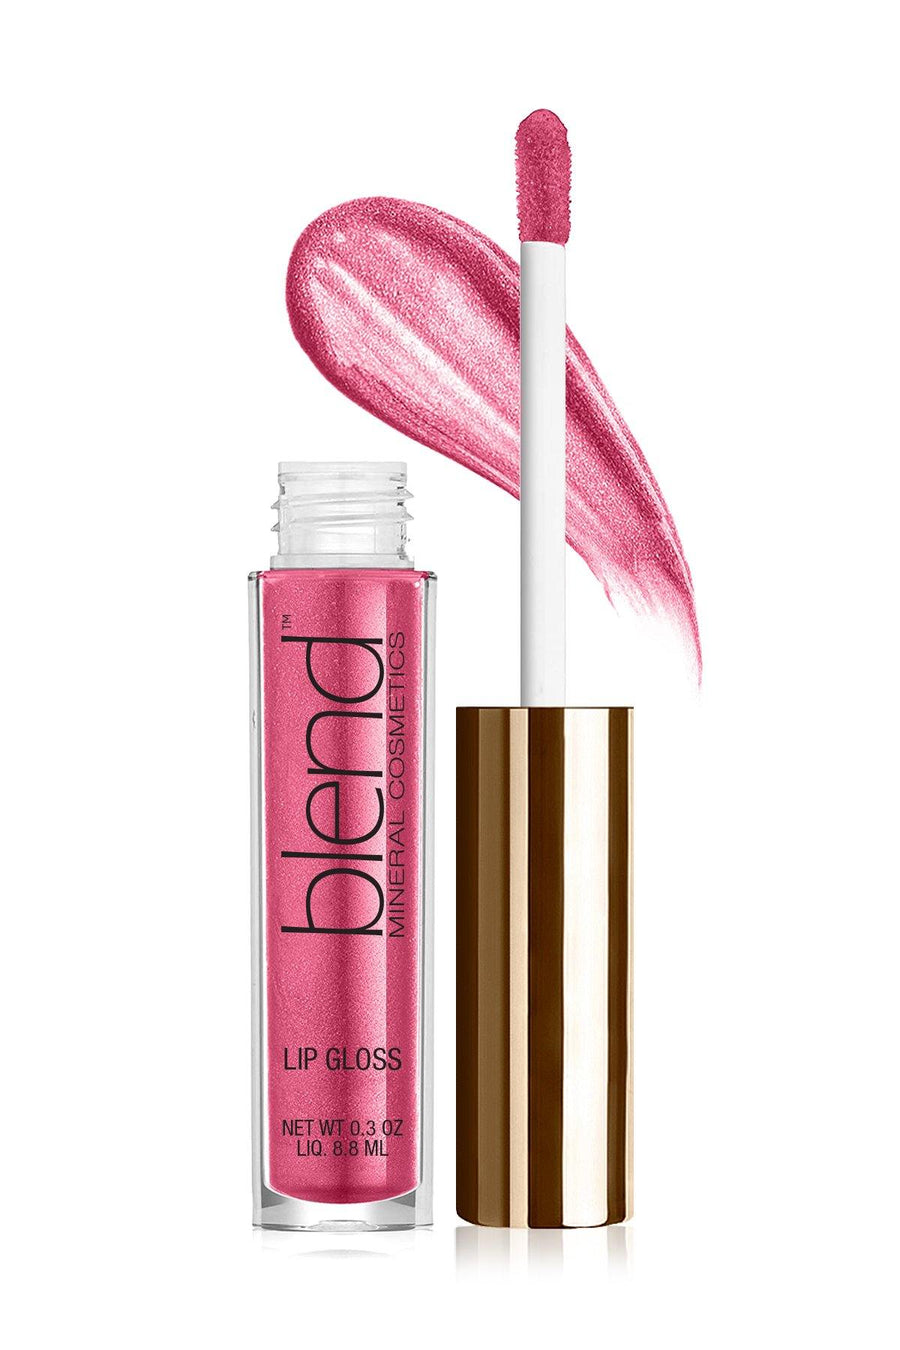 Lip Gloss #1 - Desert Spice - Blend Mineral Cosmetics